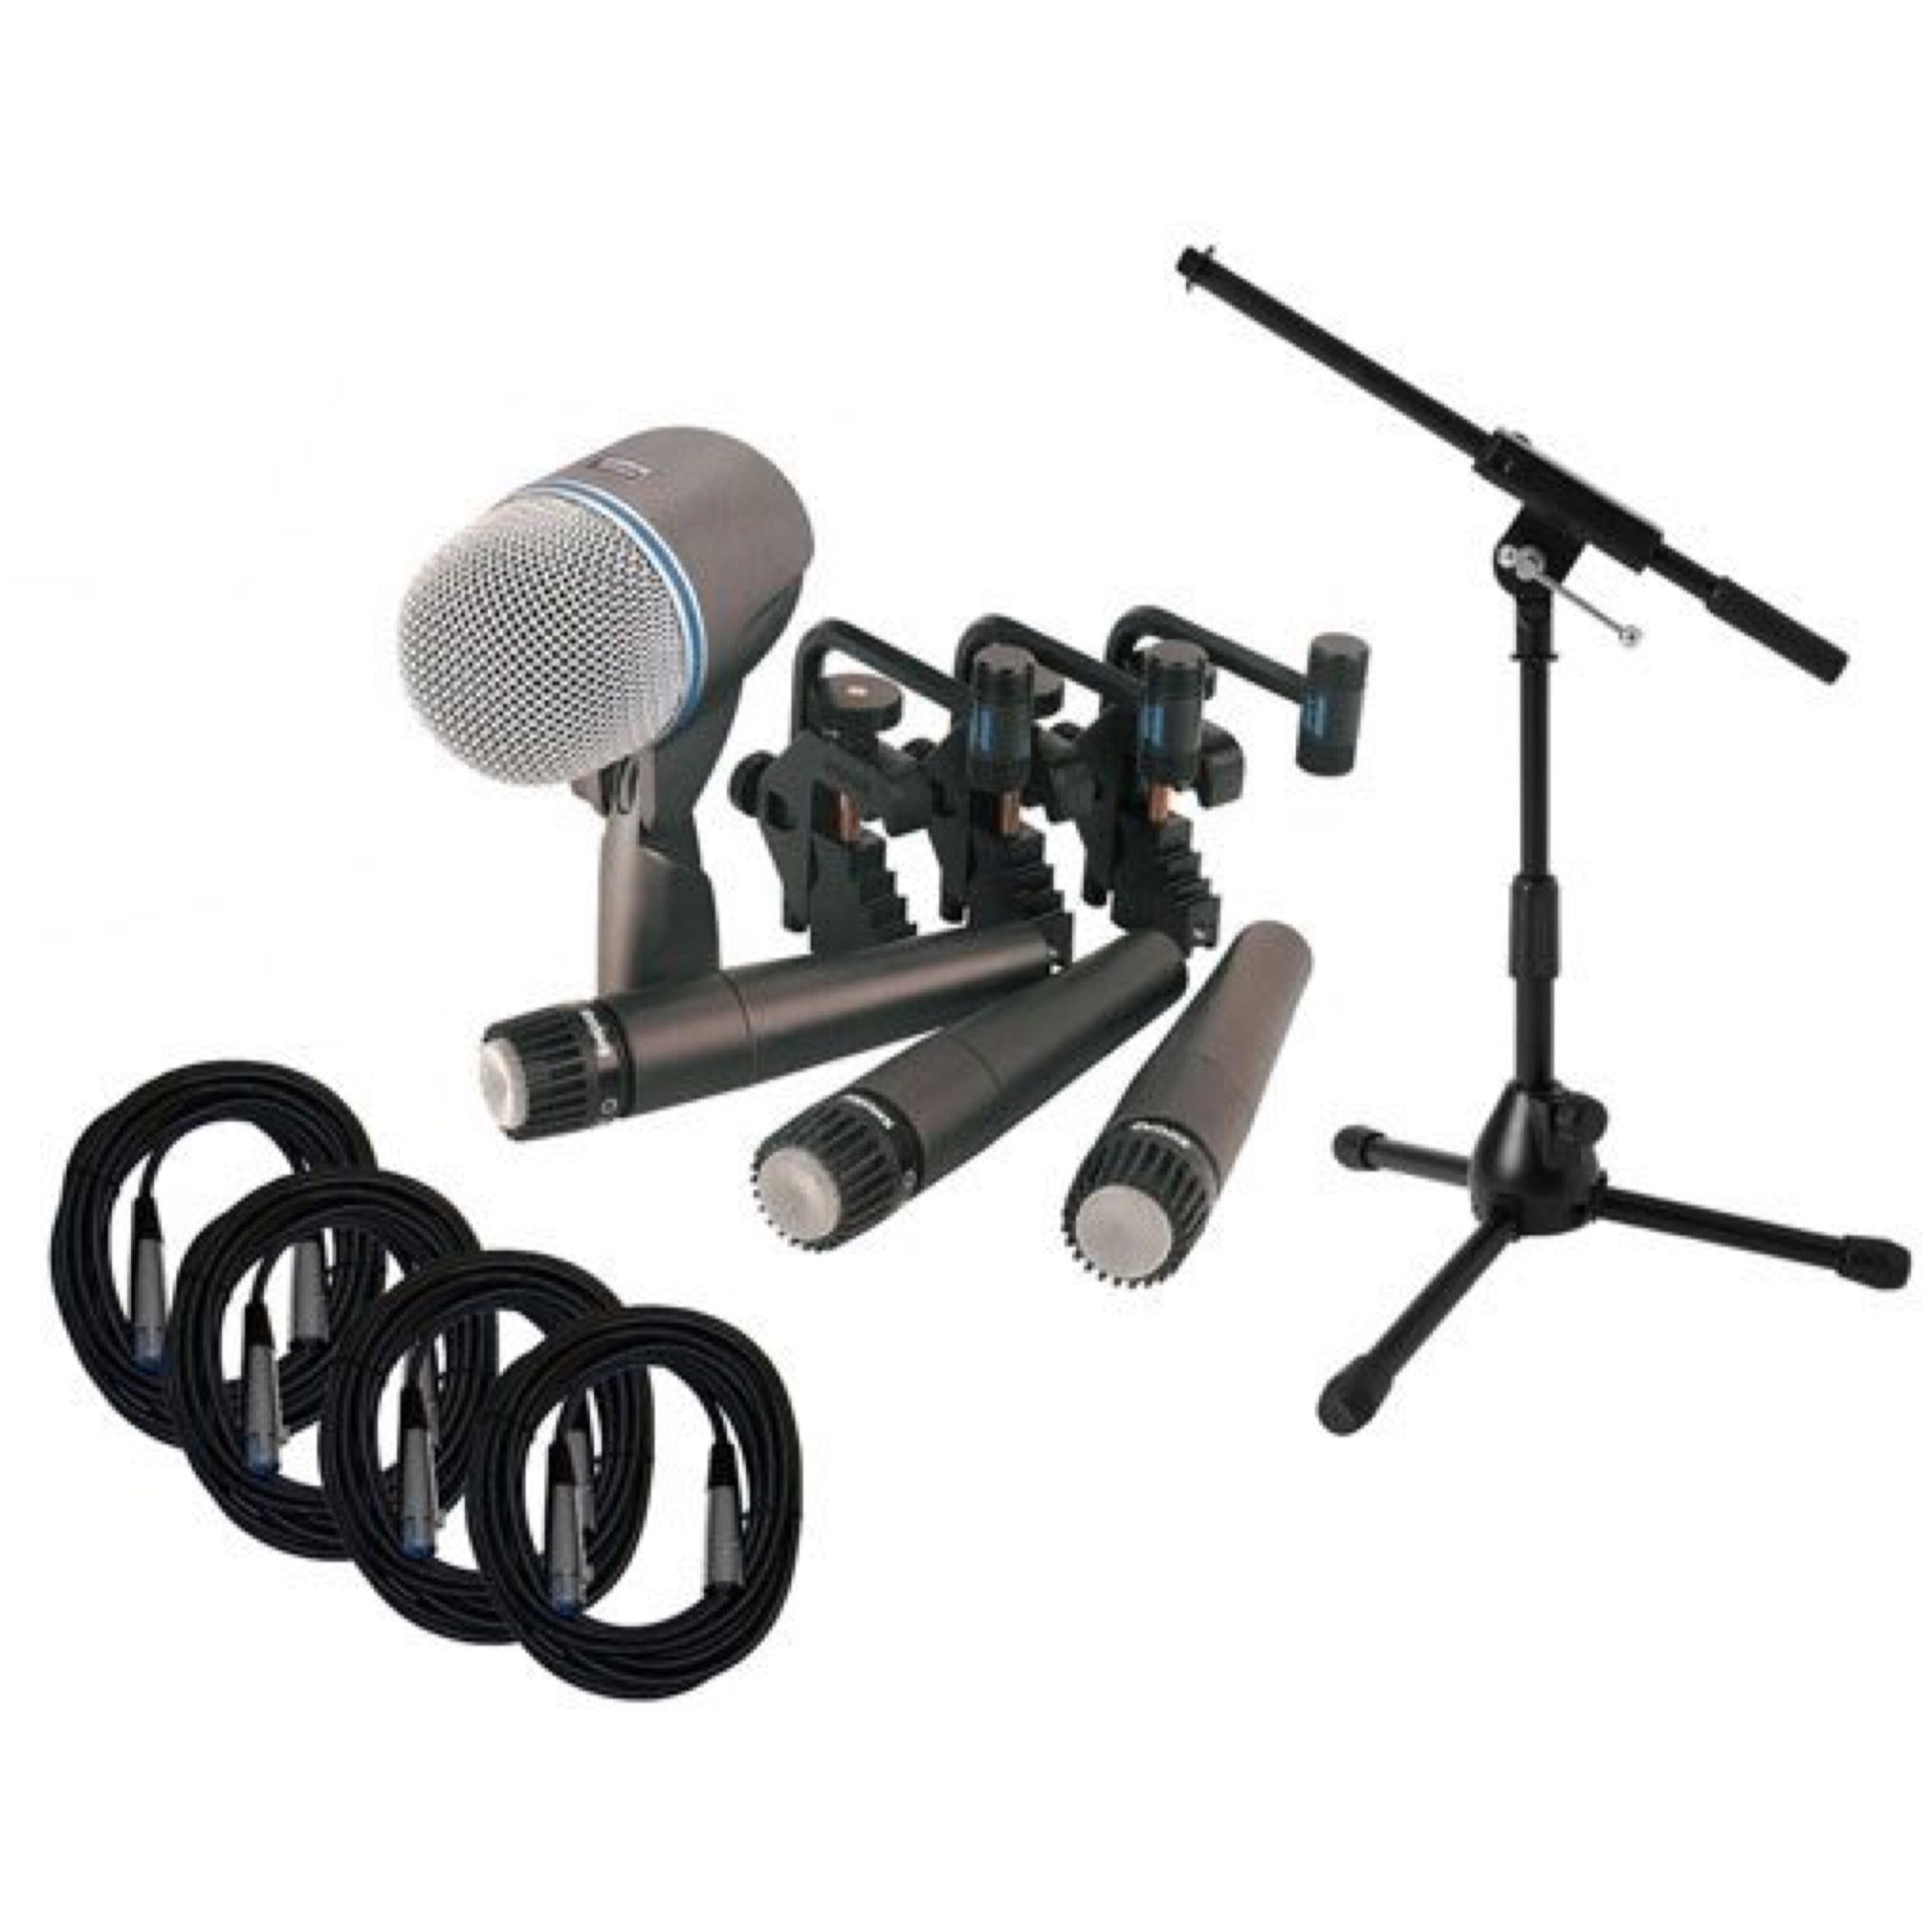 DMK57-52 - DMK57-52 Drum Microphone Kit - Shure USA